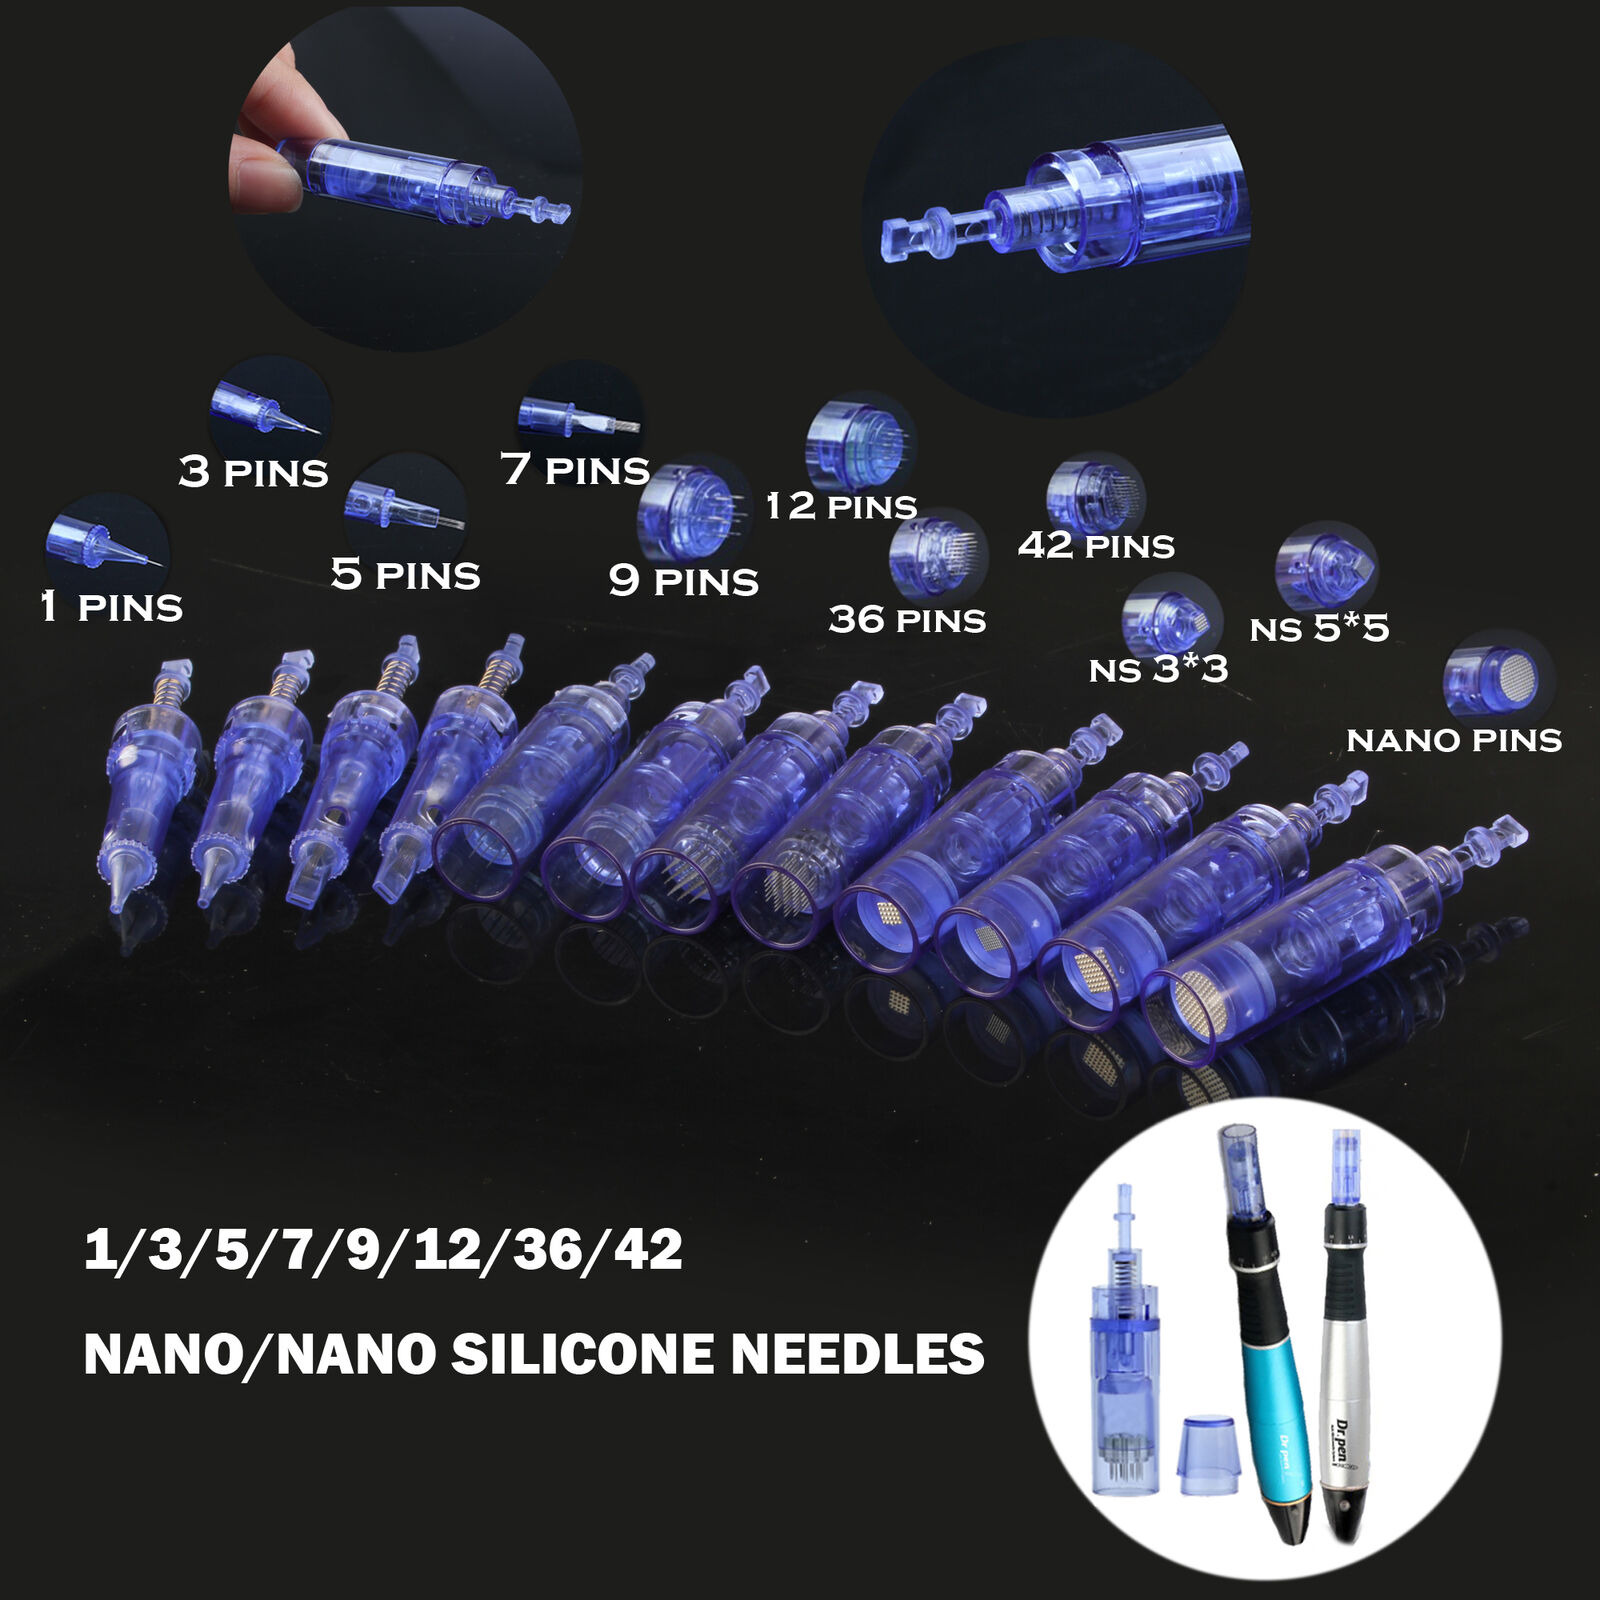 

1/3/5/7/9/12/36/42/Nano Pin Micro Needles Auto Dr. pen for Skin Derma Stamp A1 Needle Cartridges